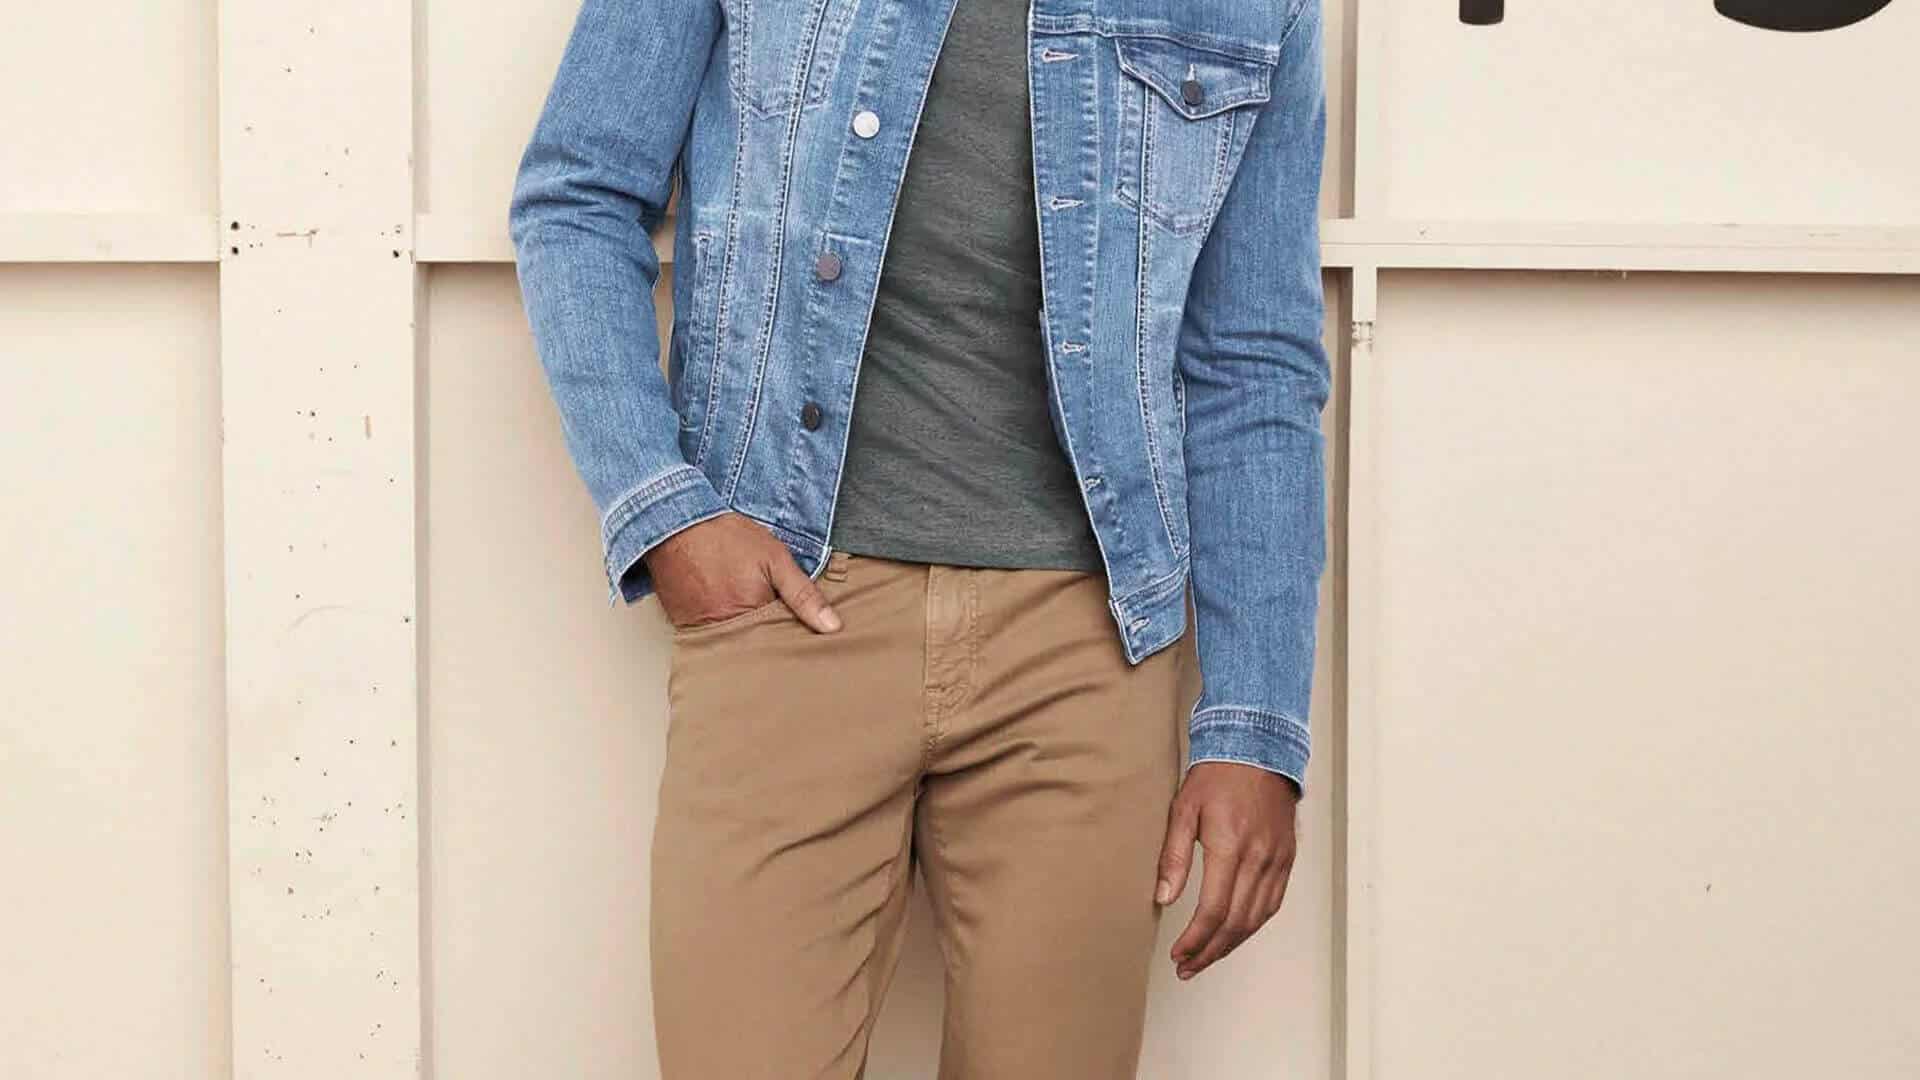 Men’s Khaki Pants Outfit Inspiration